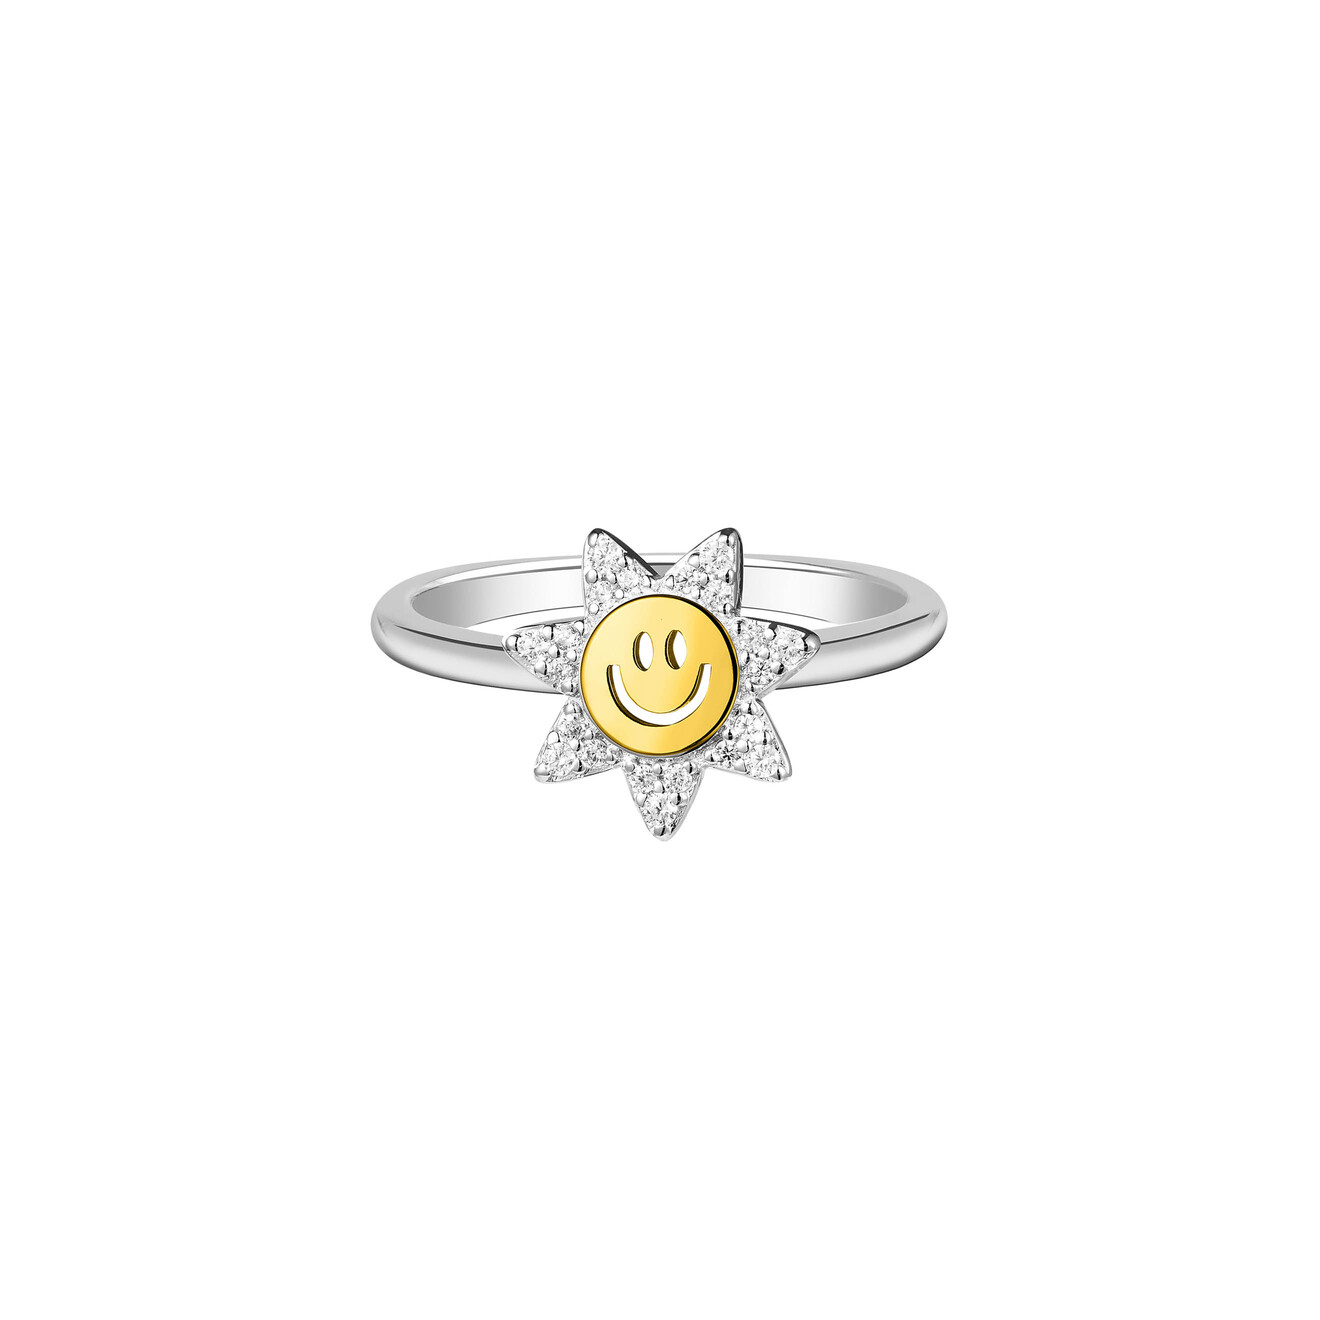 WANNA?BE! Кольцо Смайл-цветок с камнями биколорное lisa smith биколорное кольцо из двух половин